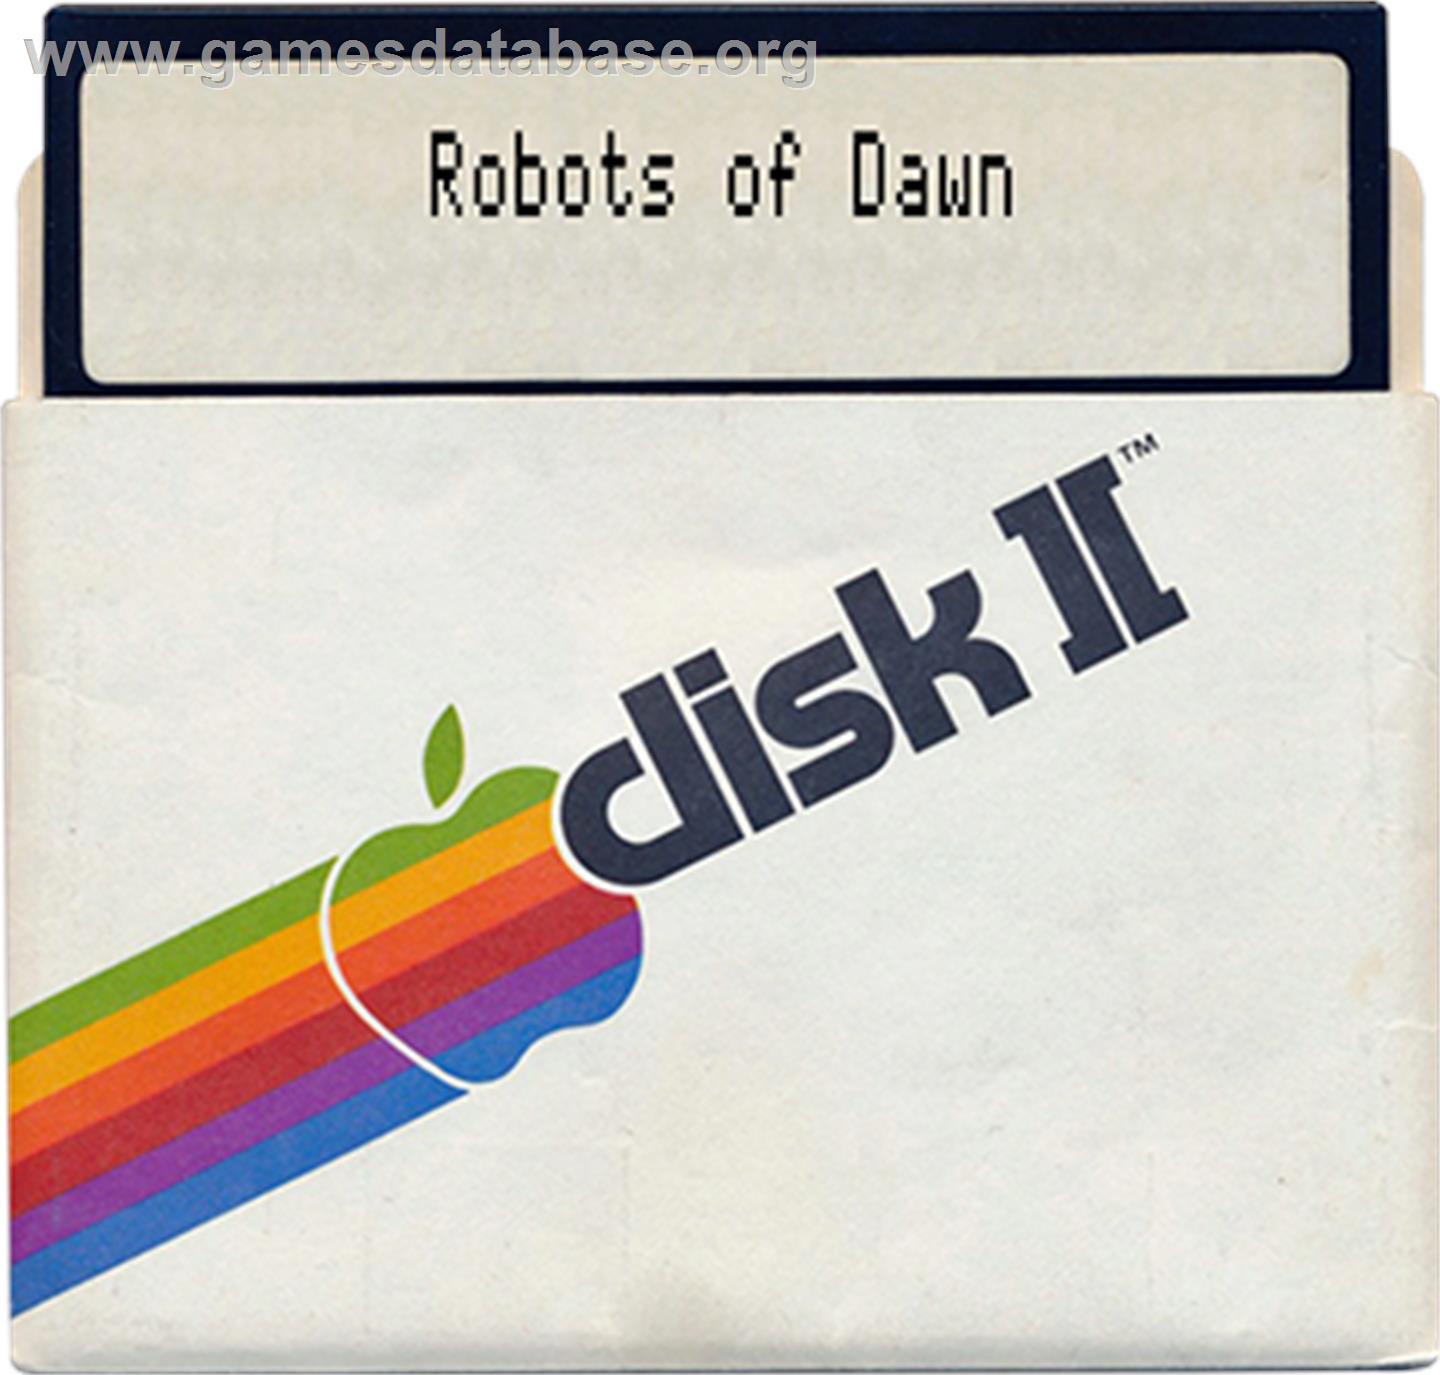 Robots of Dawn - Apple II - Artwork - Disc